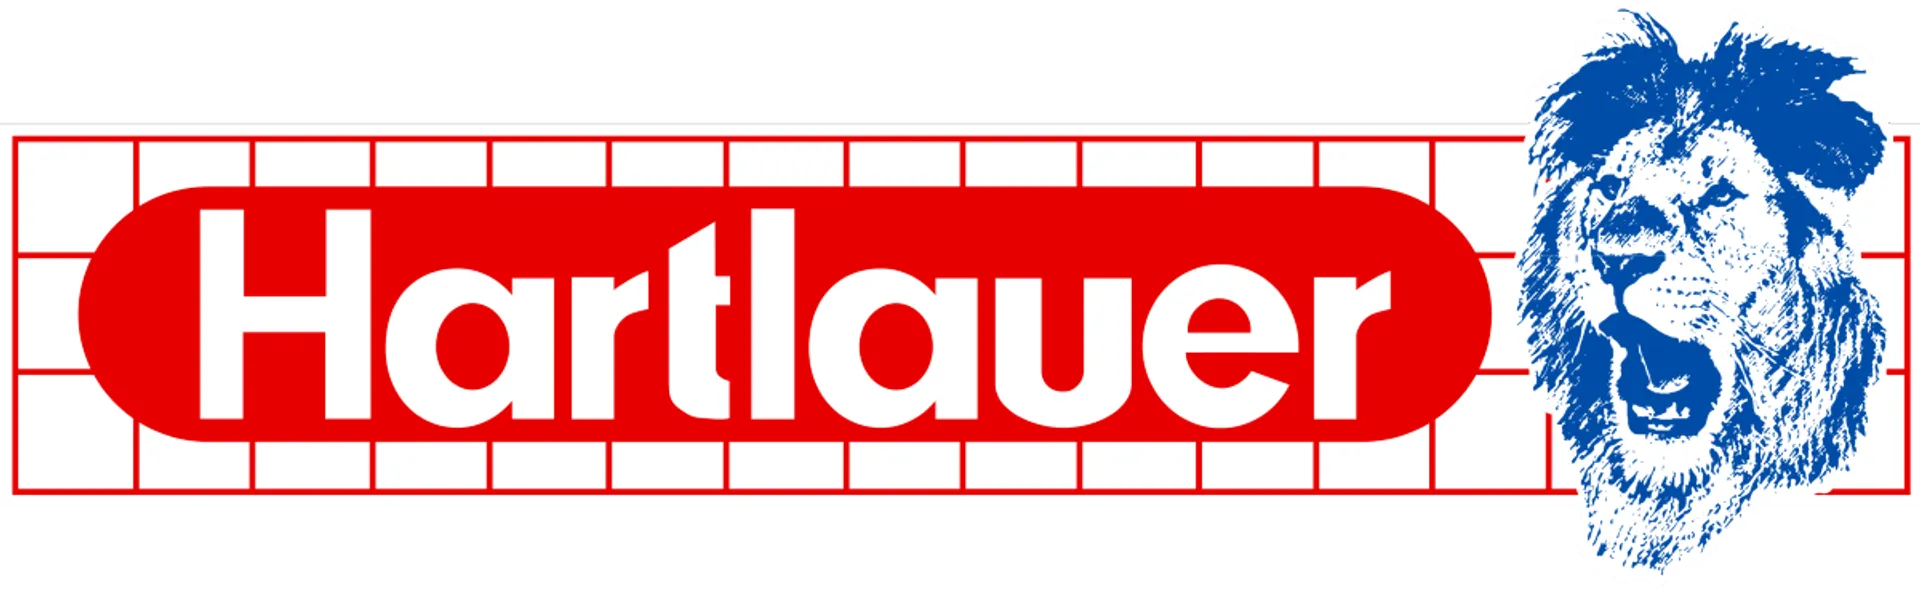 HARTLAUER logo die aktuell Flugblatt